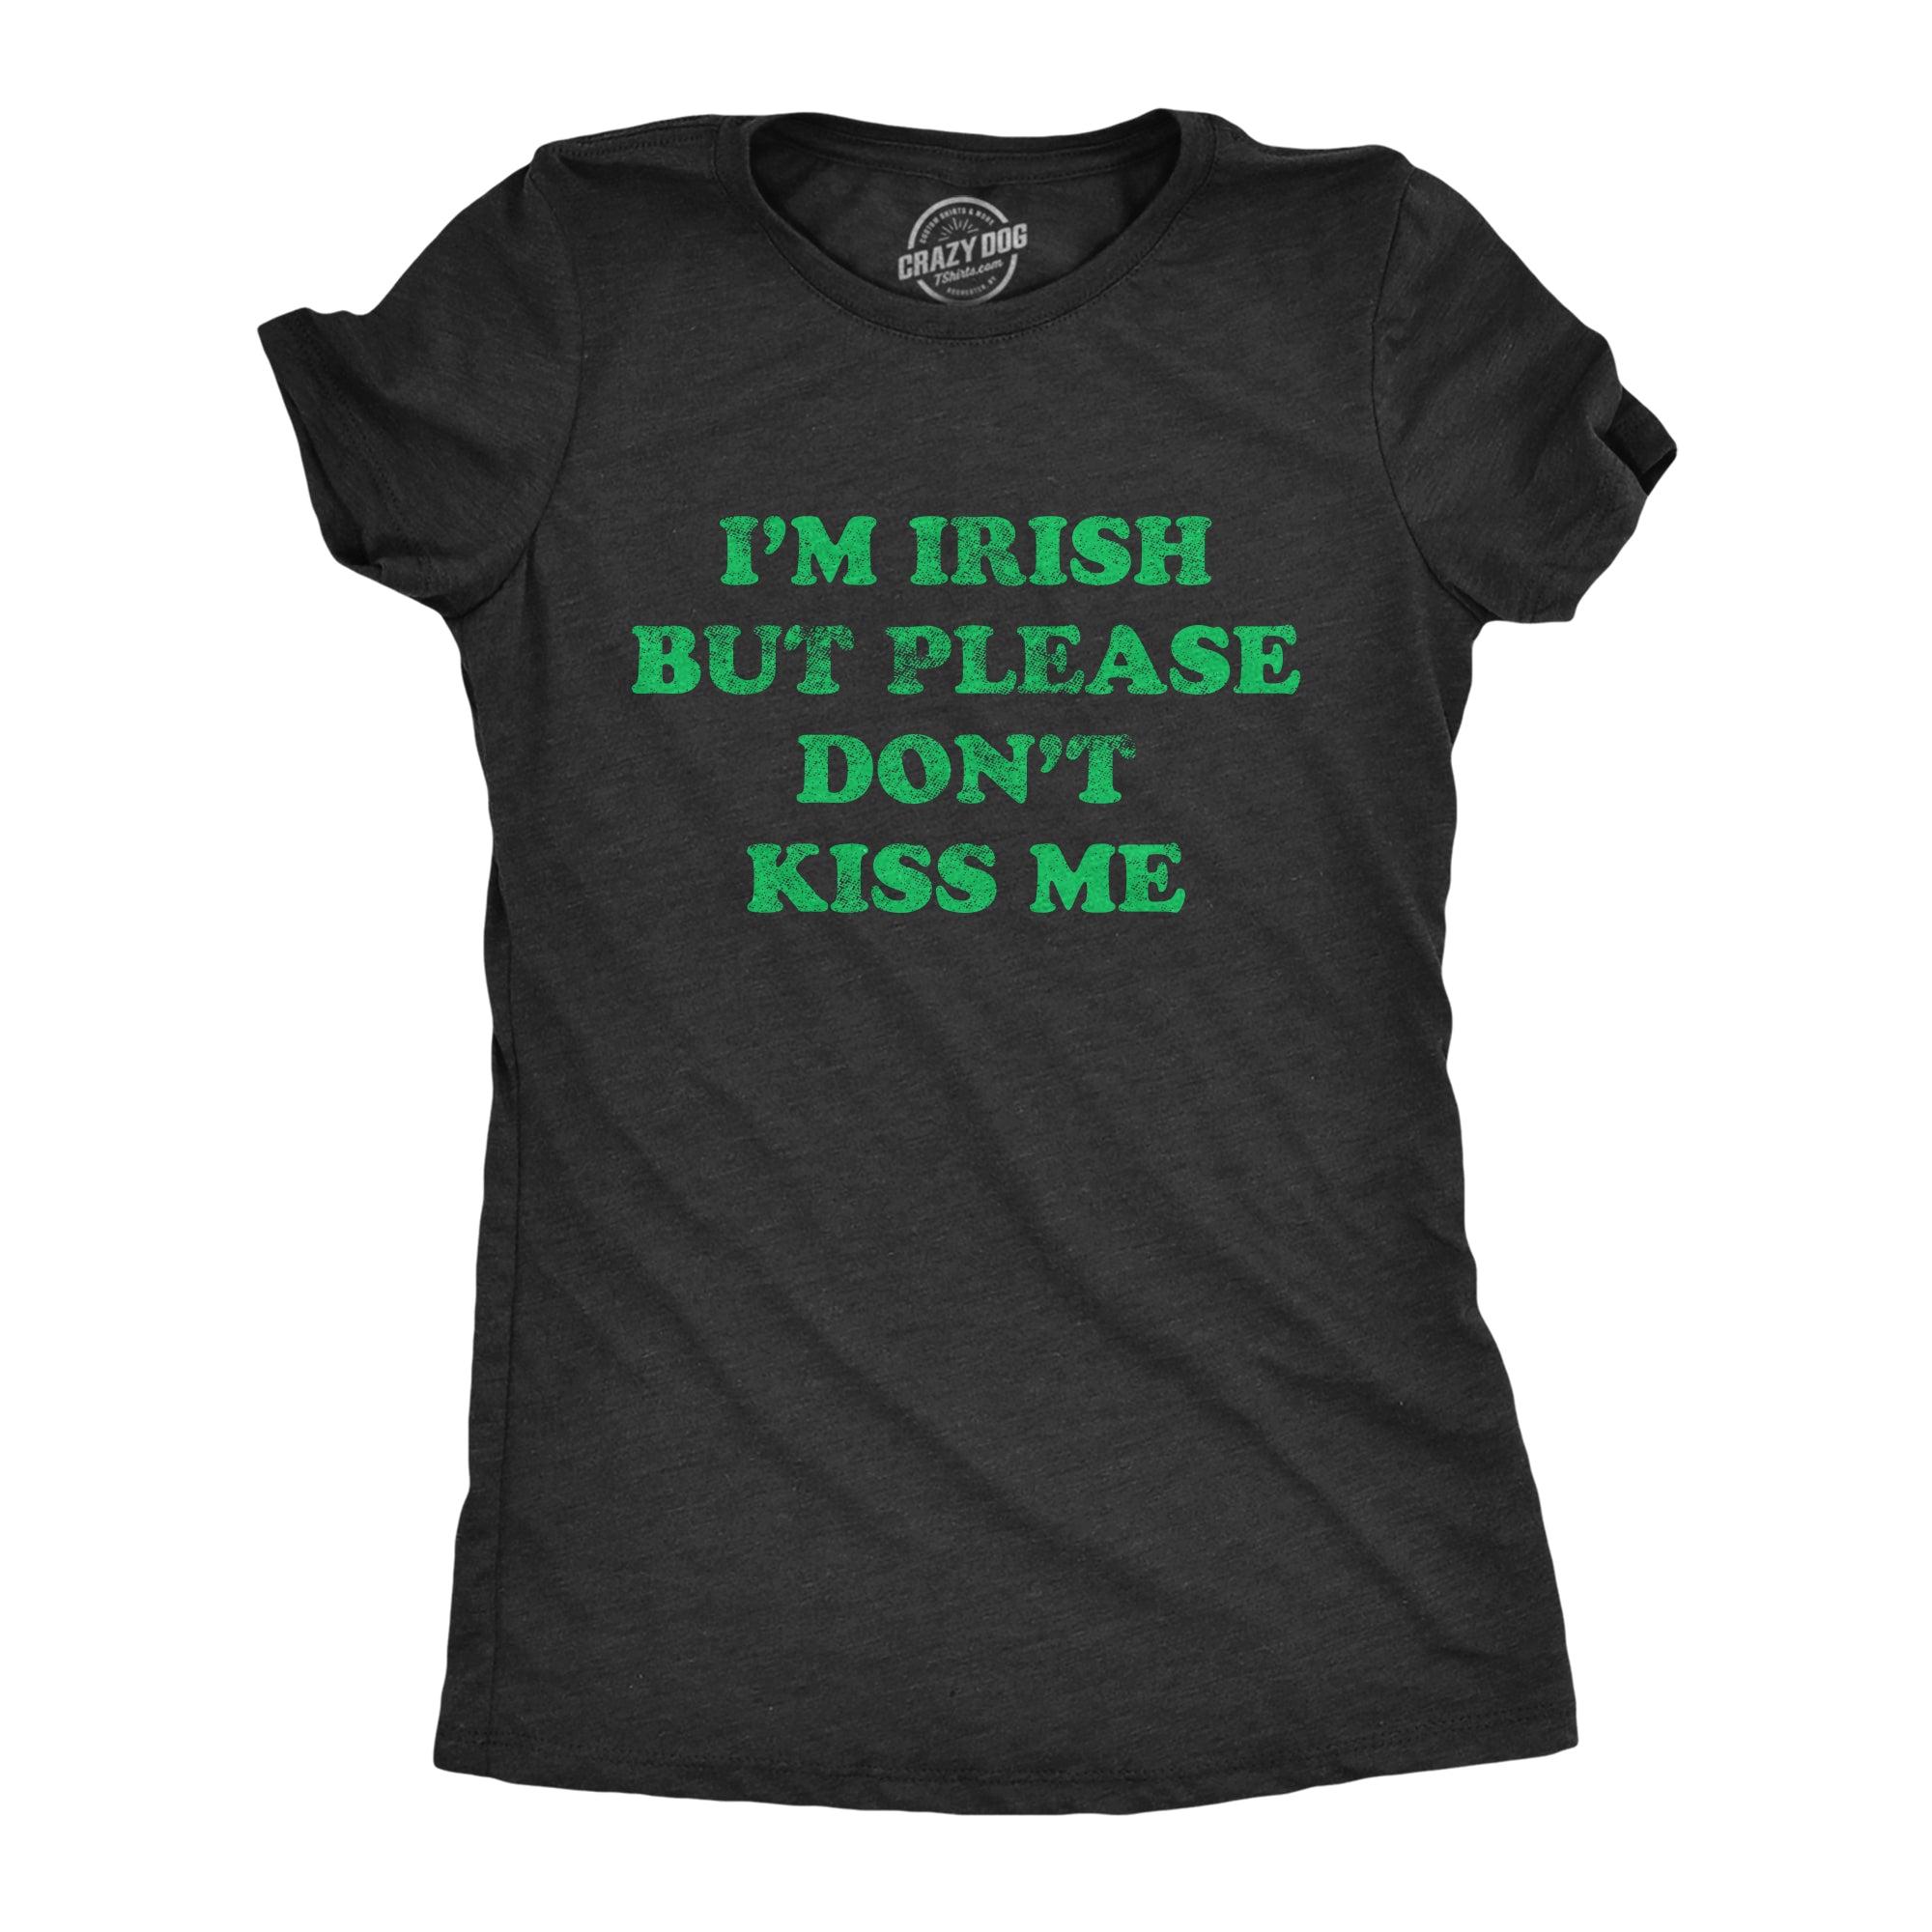 Funny Heather Black I'm Irish But Please Don't Kiss Me Womens T Shirt Nerdy Saint Patrick's Day Tee